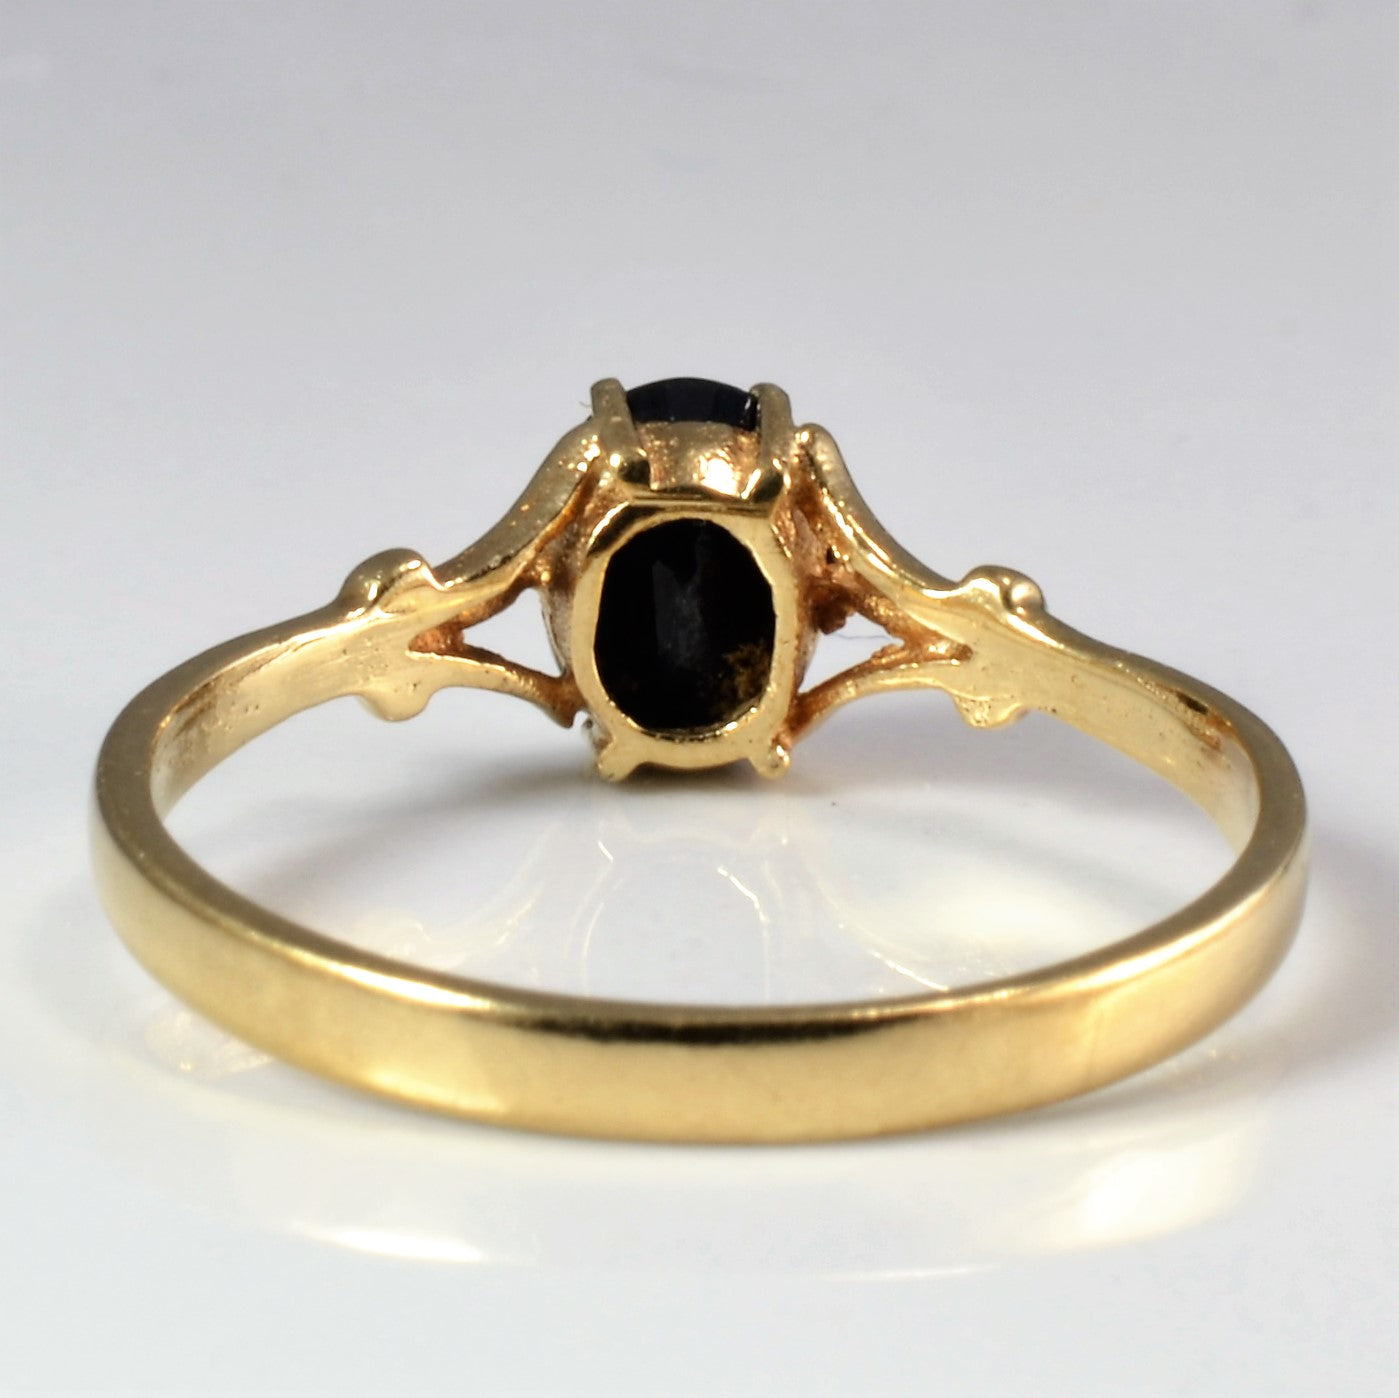 Solitaire Black Sapphire Ring | SZ 7.75 |